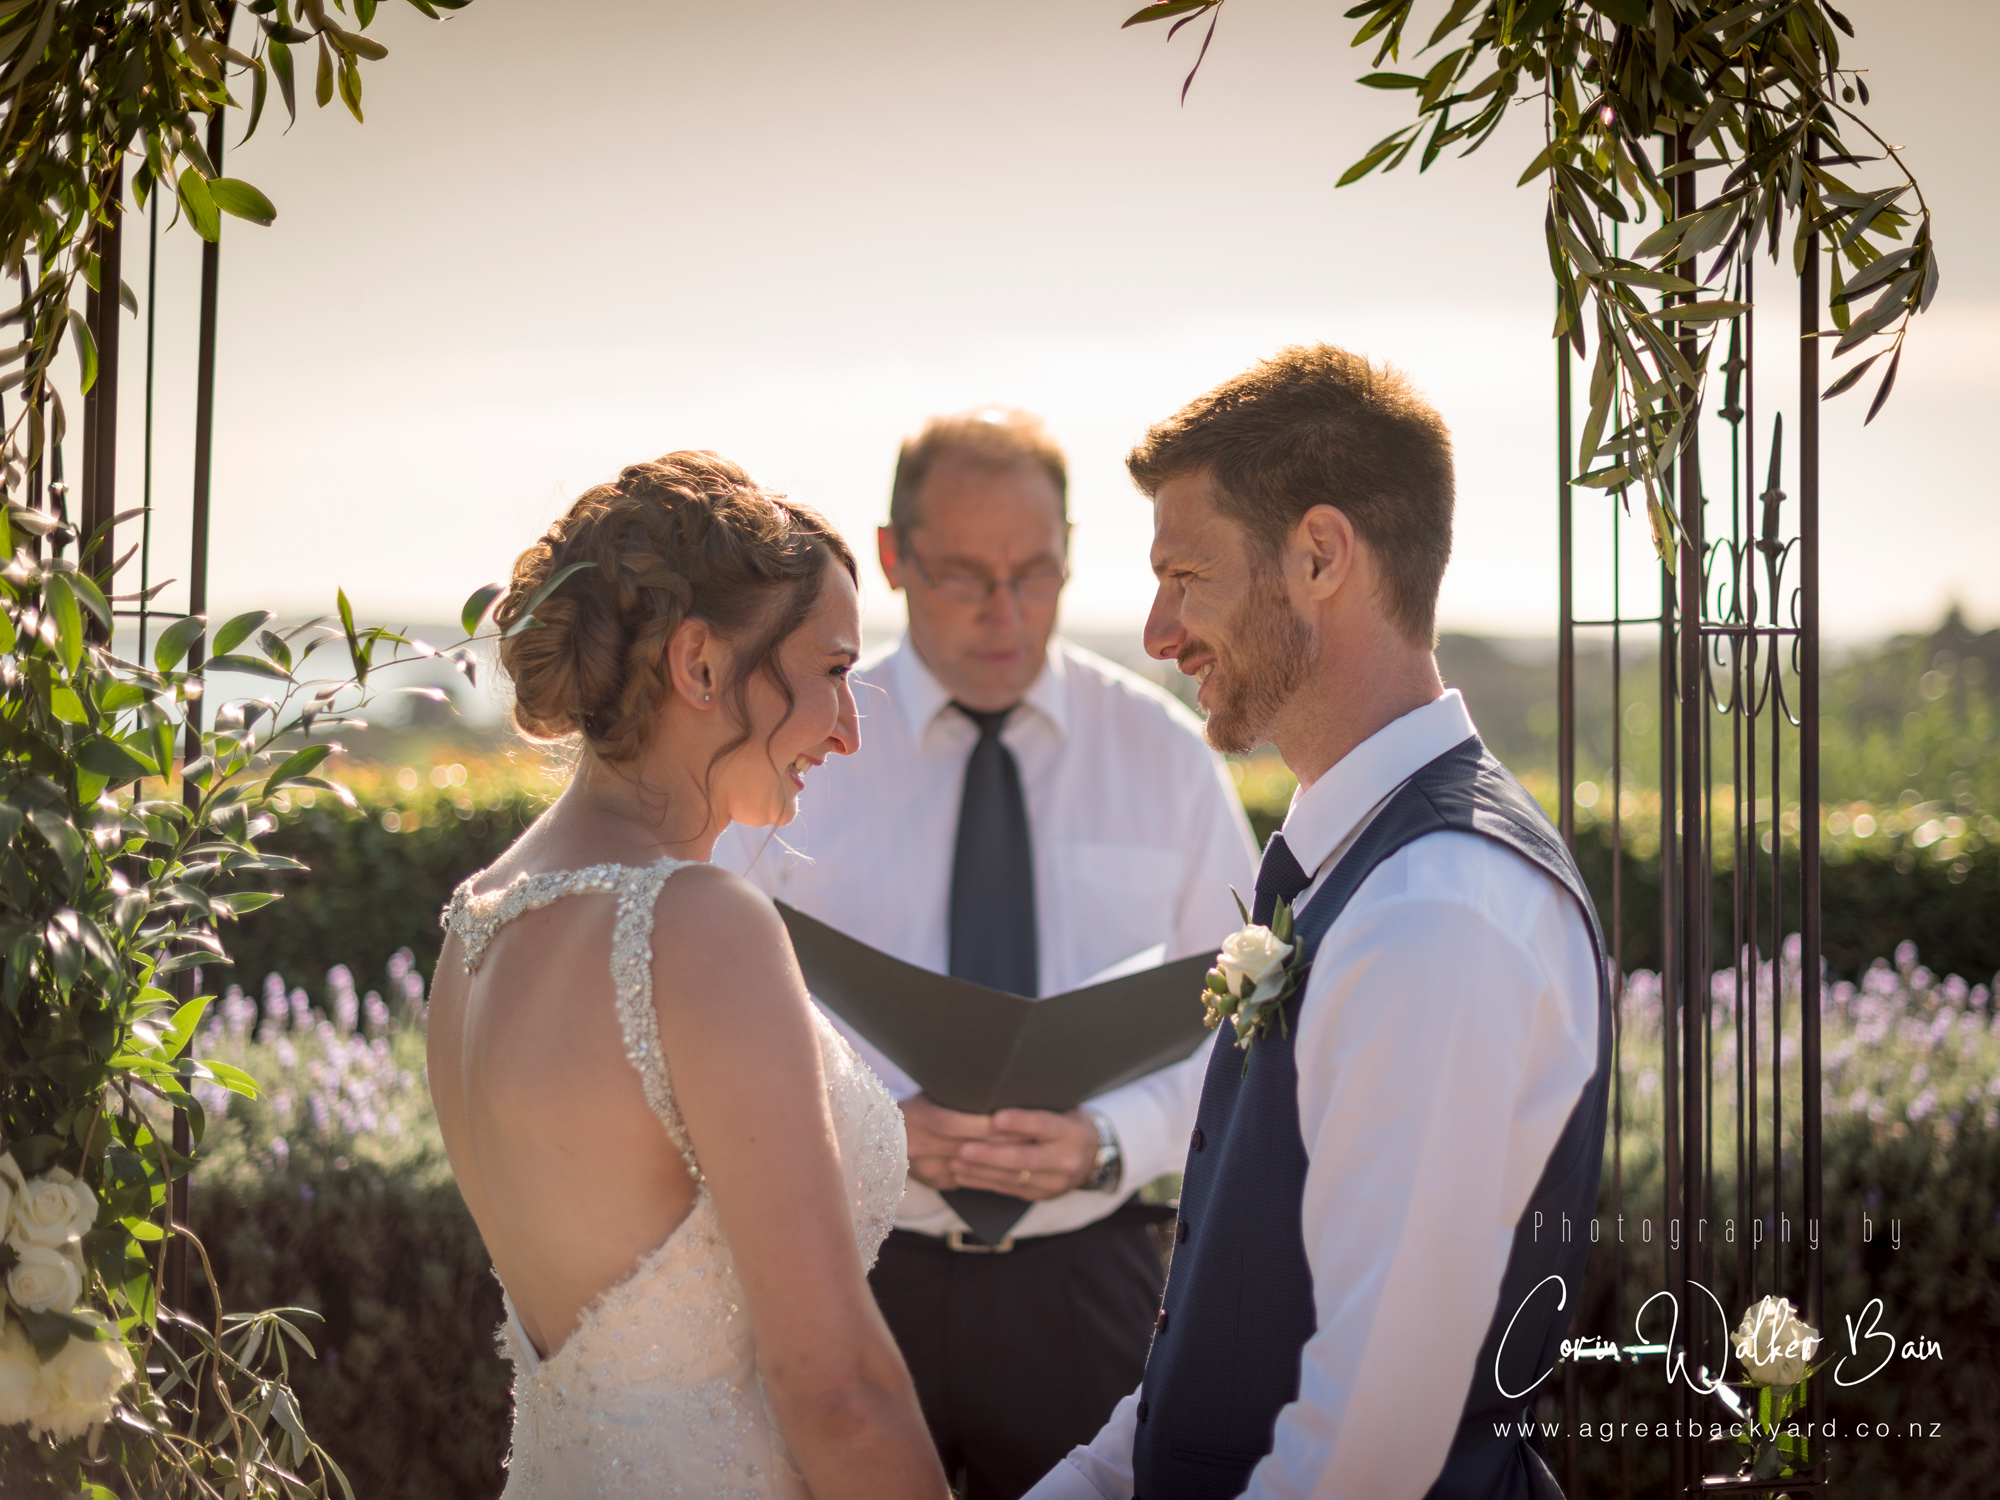 Ceremony smiles at Andy and Emma's Waiheke Island wedding by New Zealand wedding photographer Corin Walker Bain of a great backyard